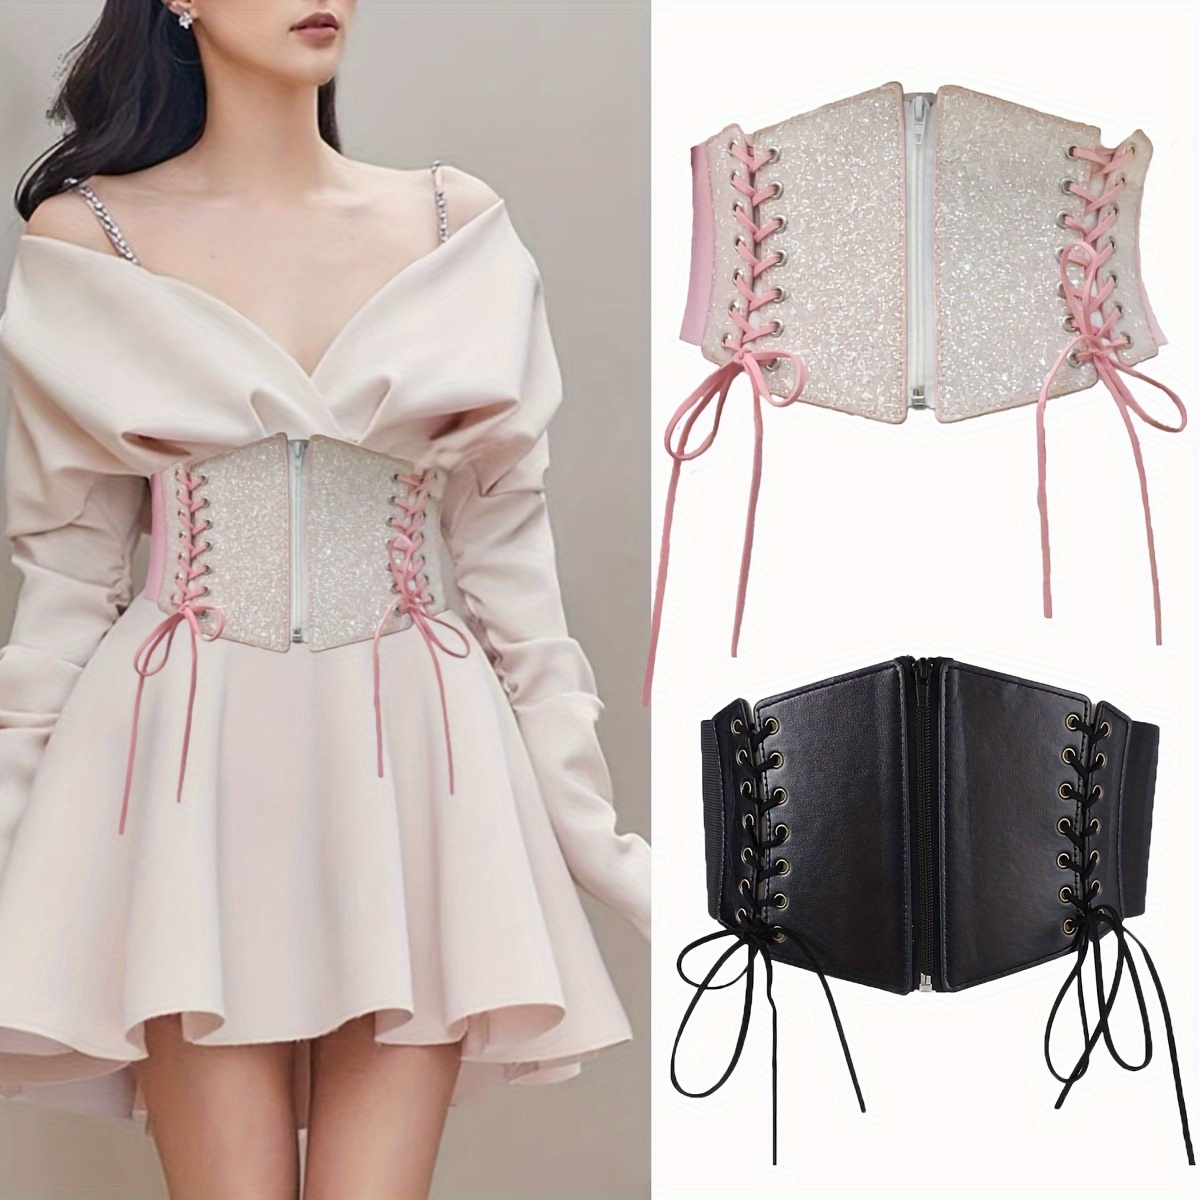 Seyurigaoka Womens Wide Elastic Lace-up Waist Belt Adjustable Leather Cinch  Corset Waistband (Pink, Small) 